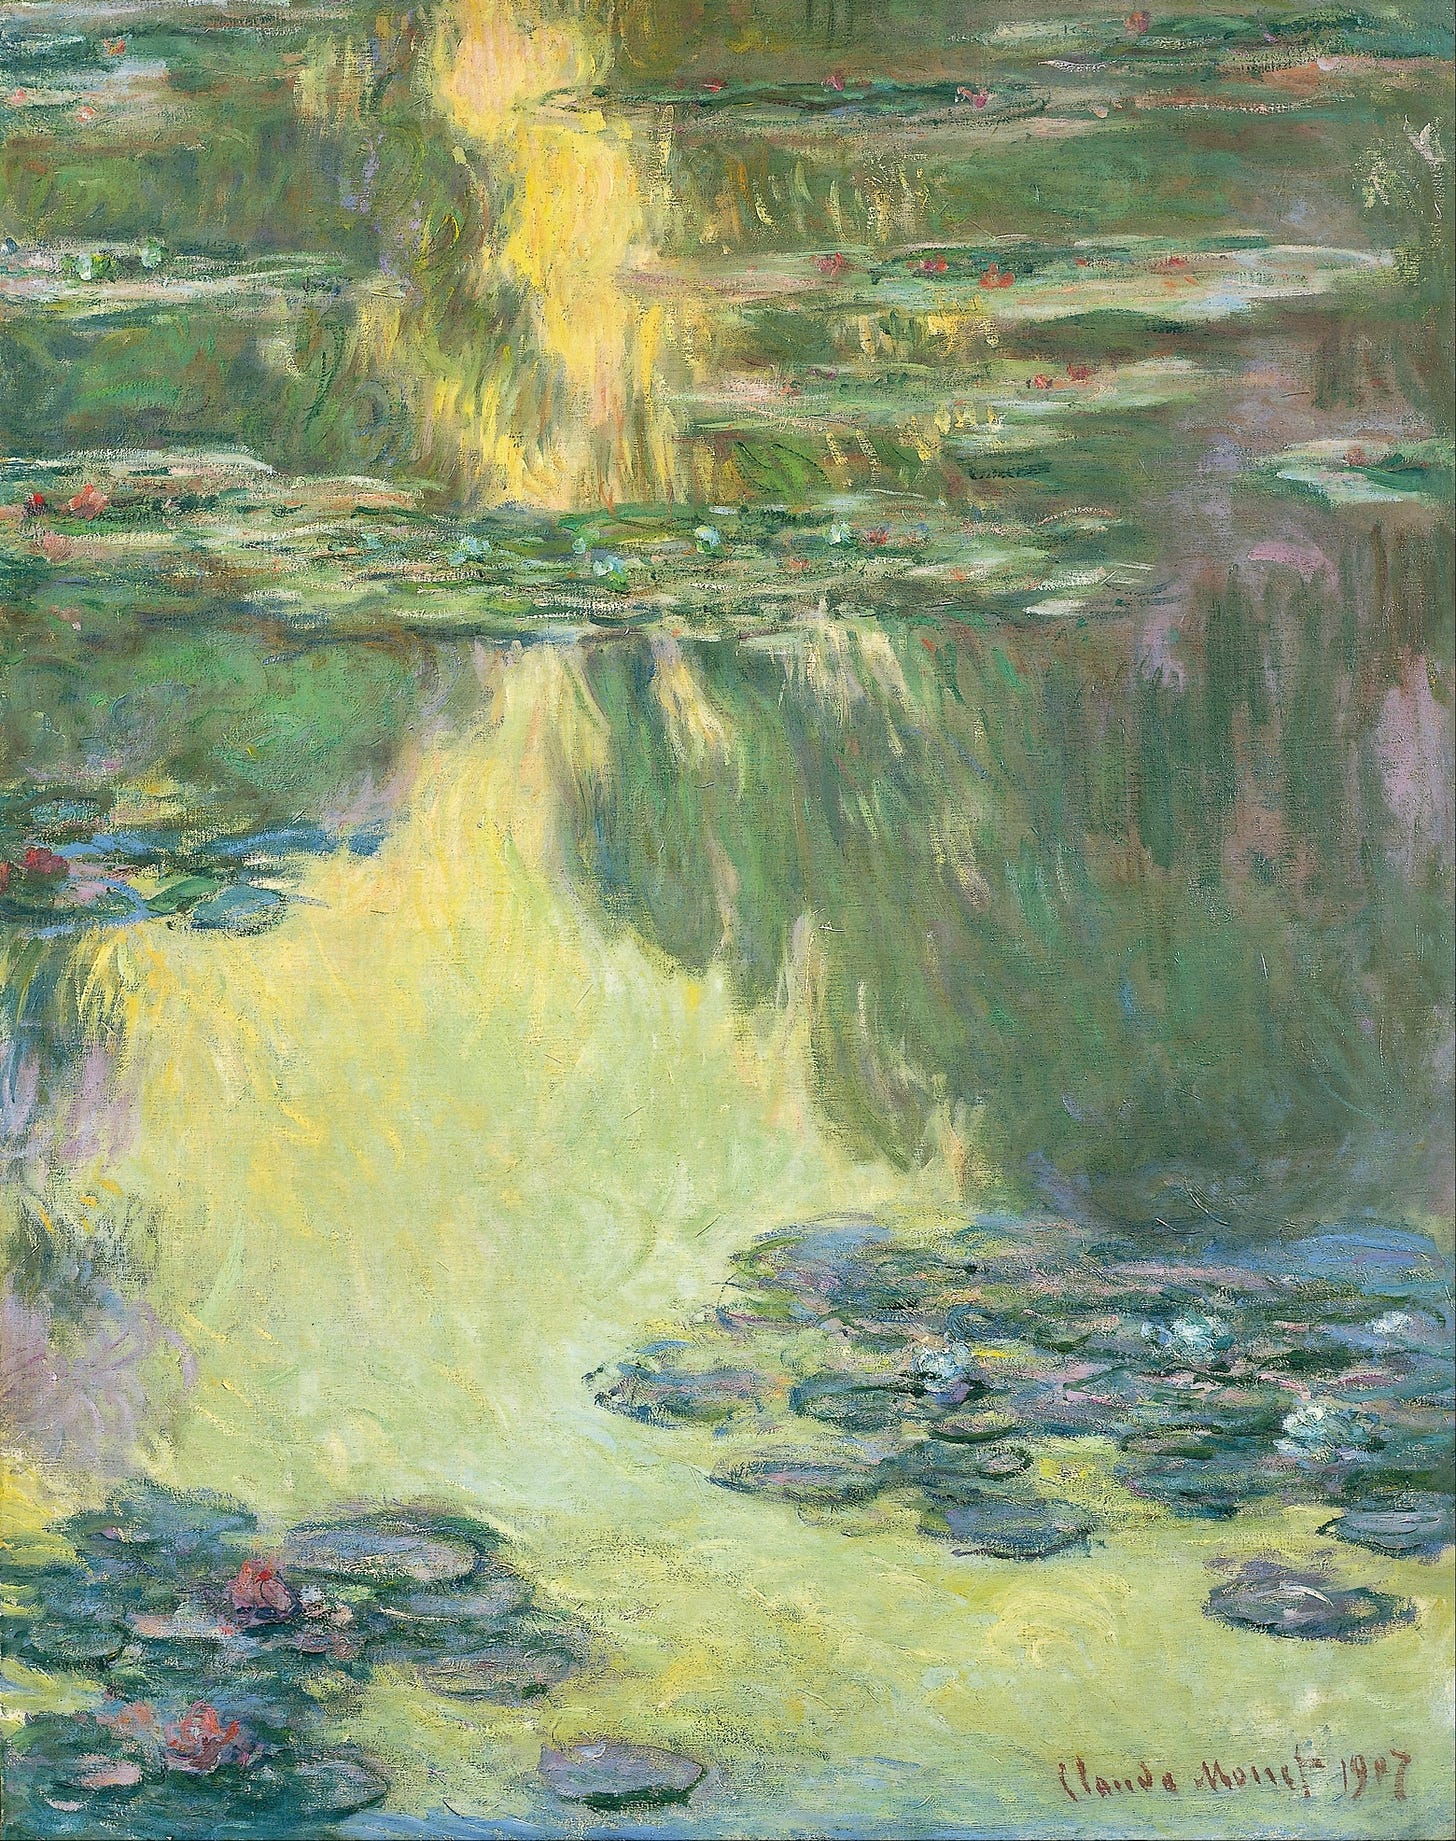 Waterlilies (1907) by Claude Monet